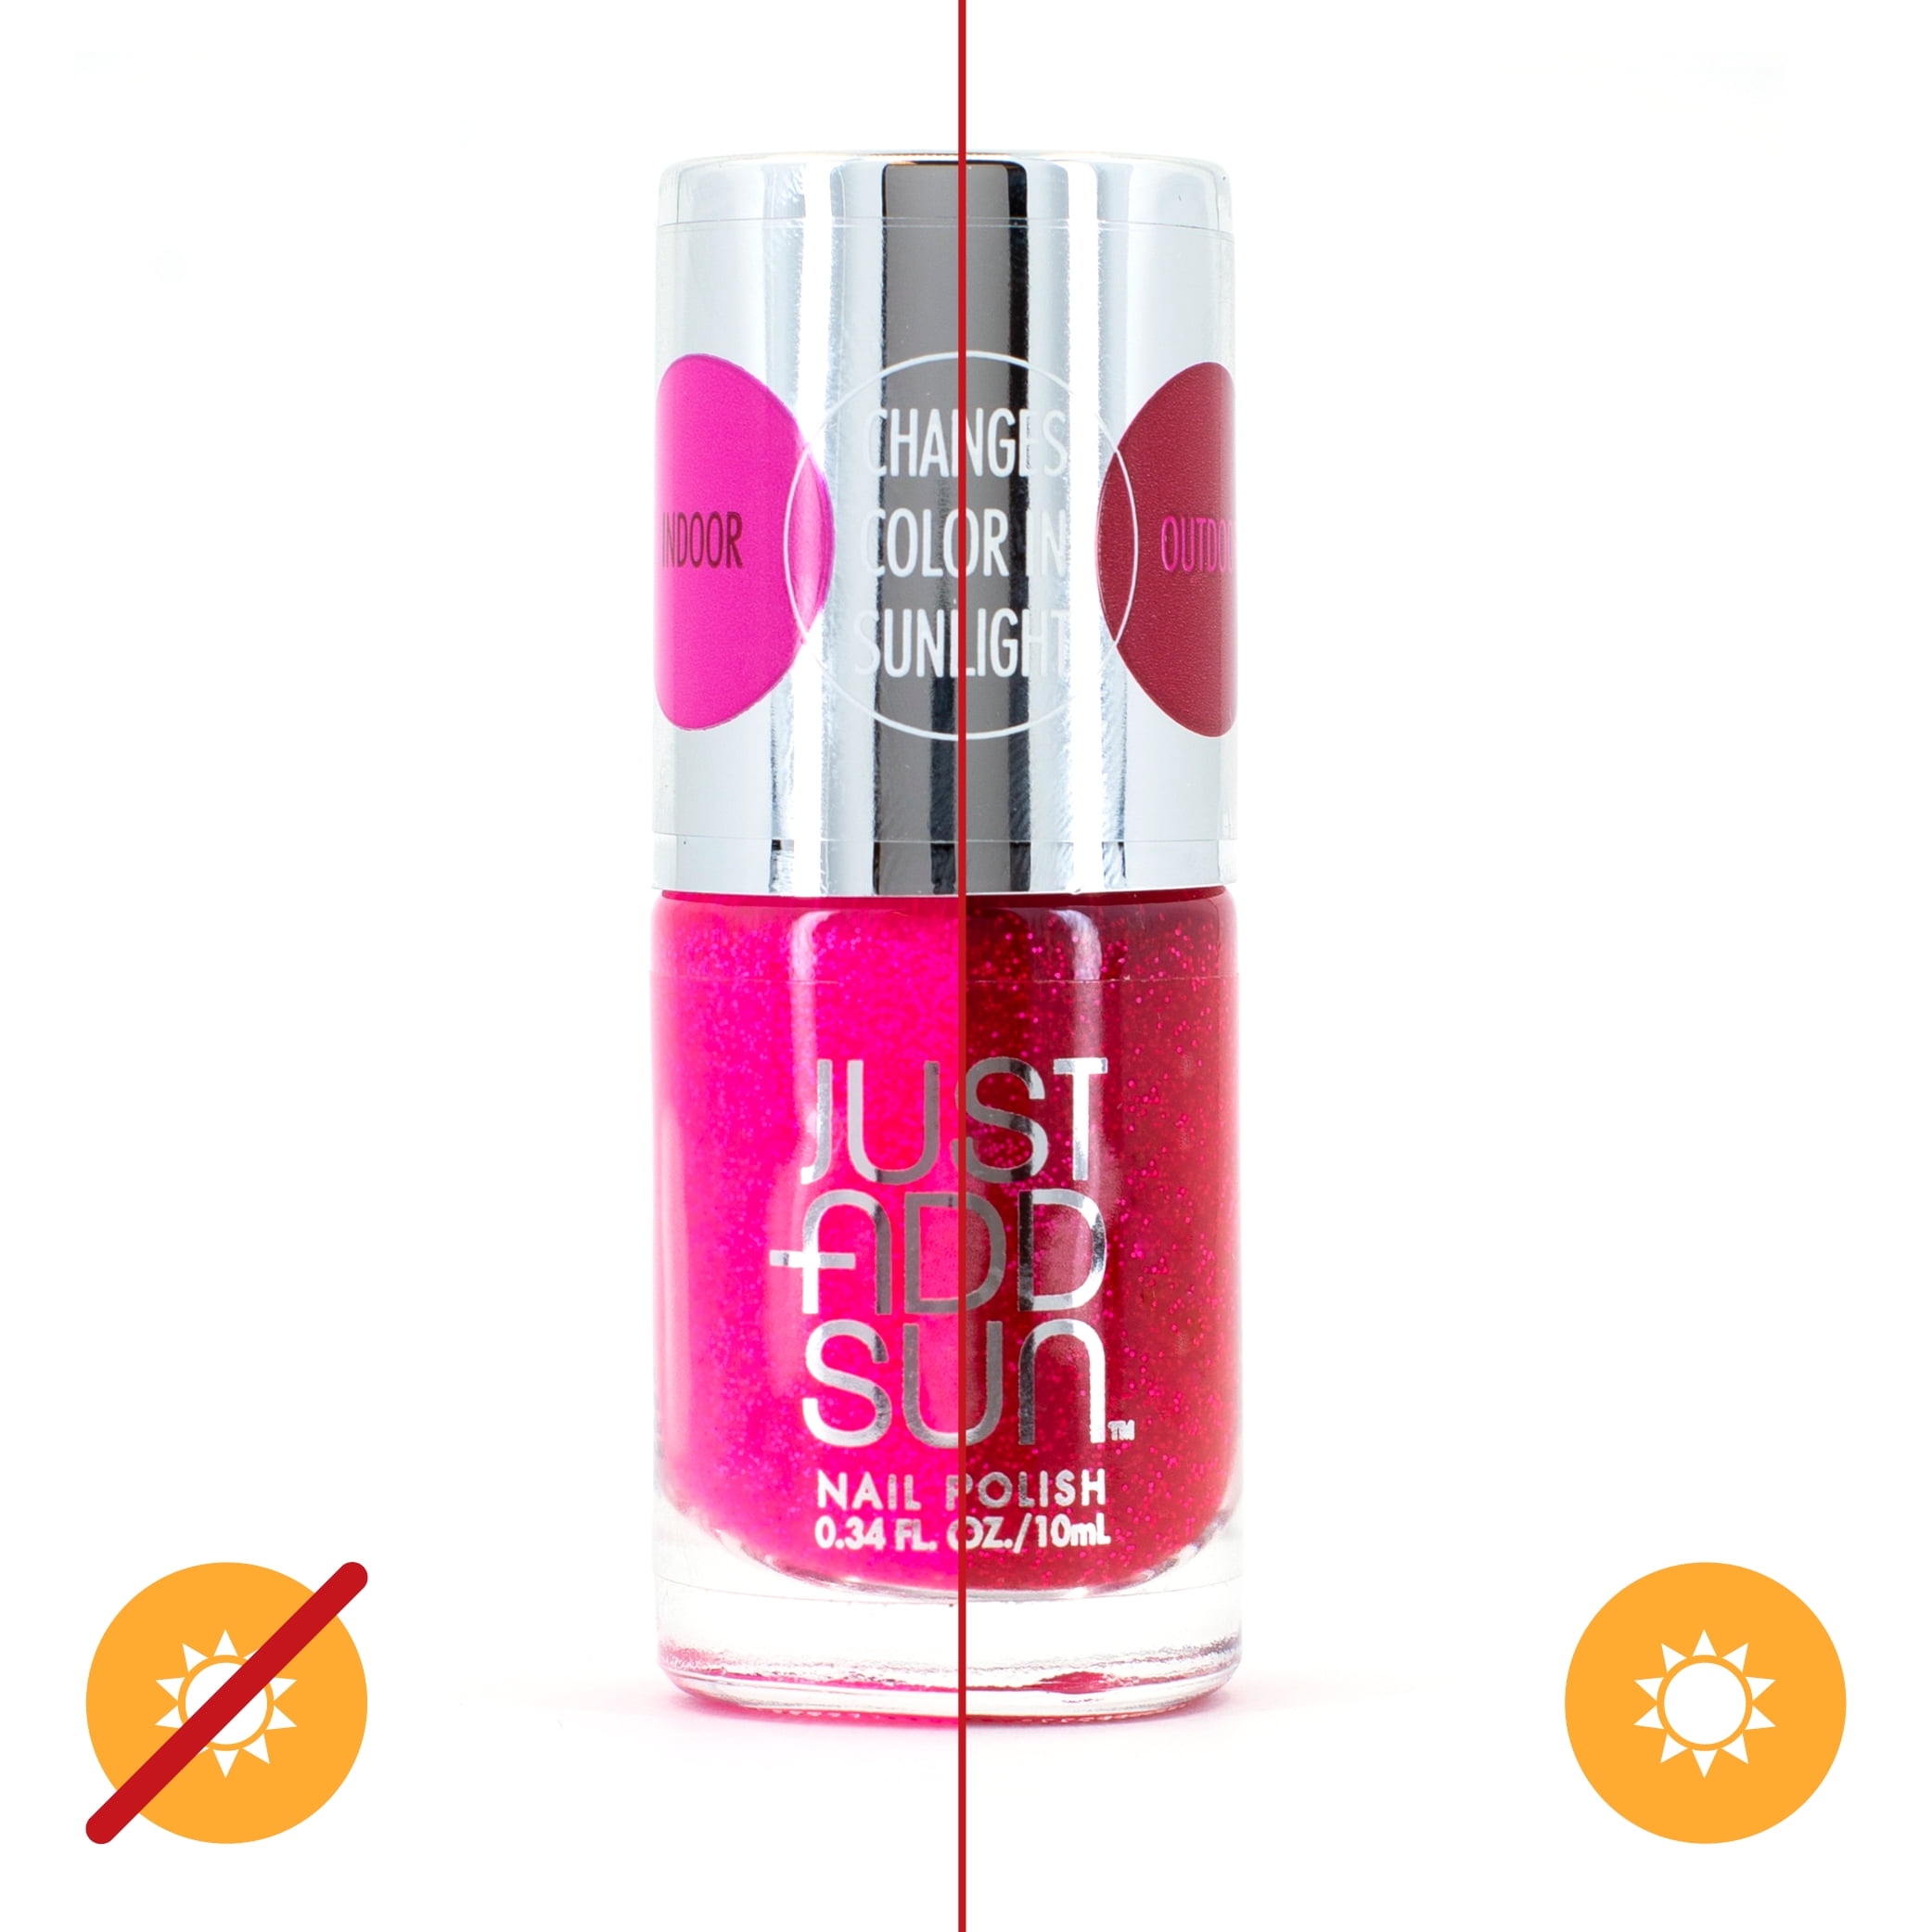 Just Add Sun Nail Polish, Get Your Pink, 0.34 oz